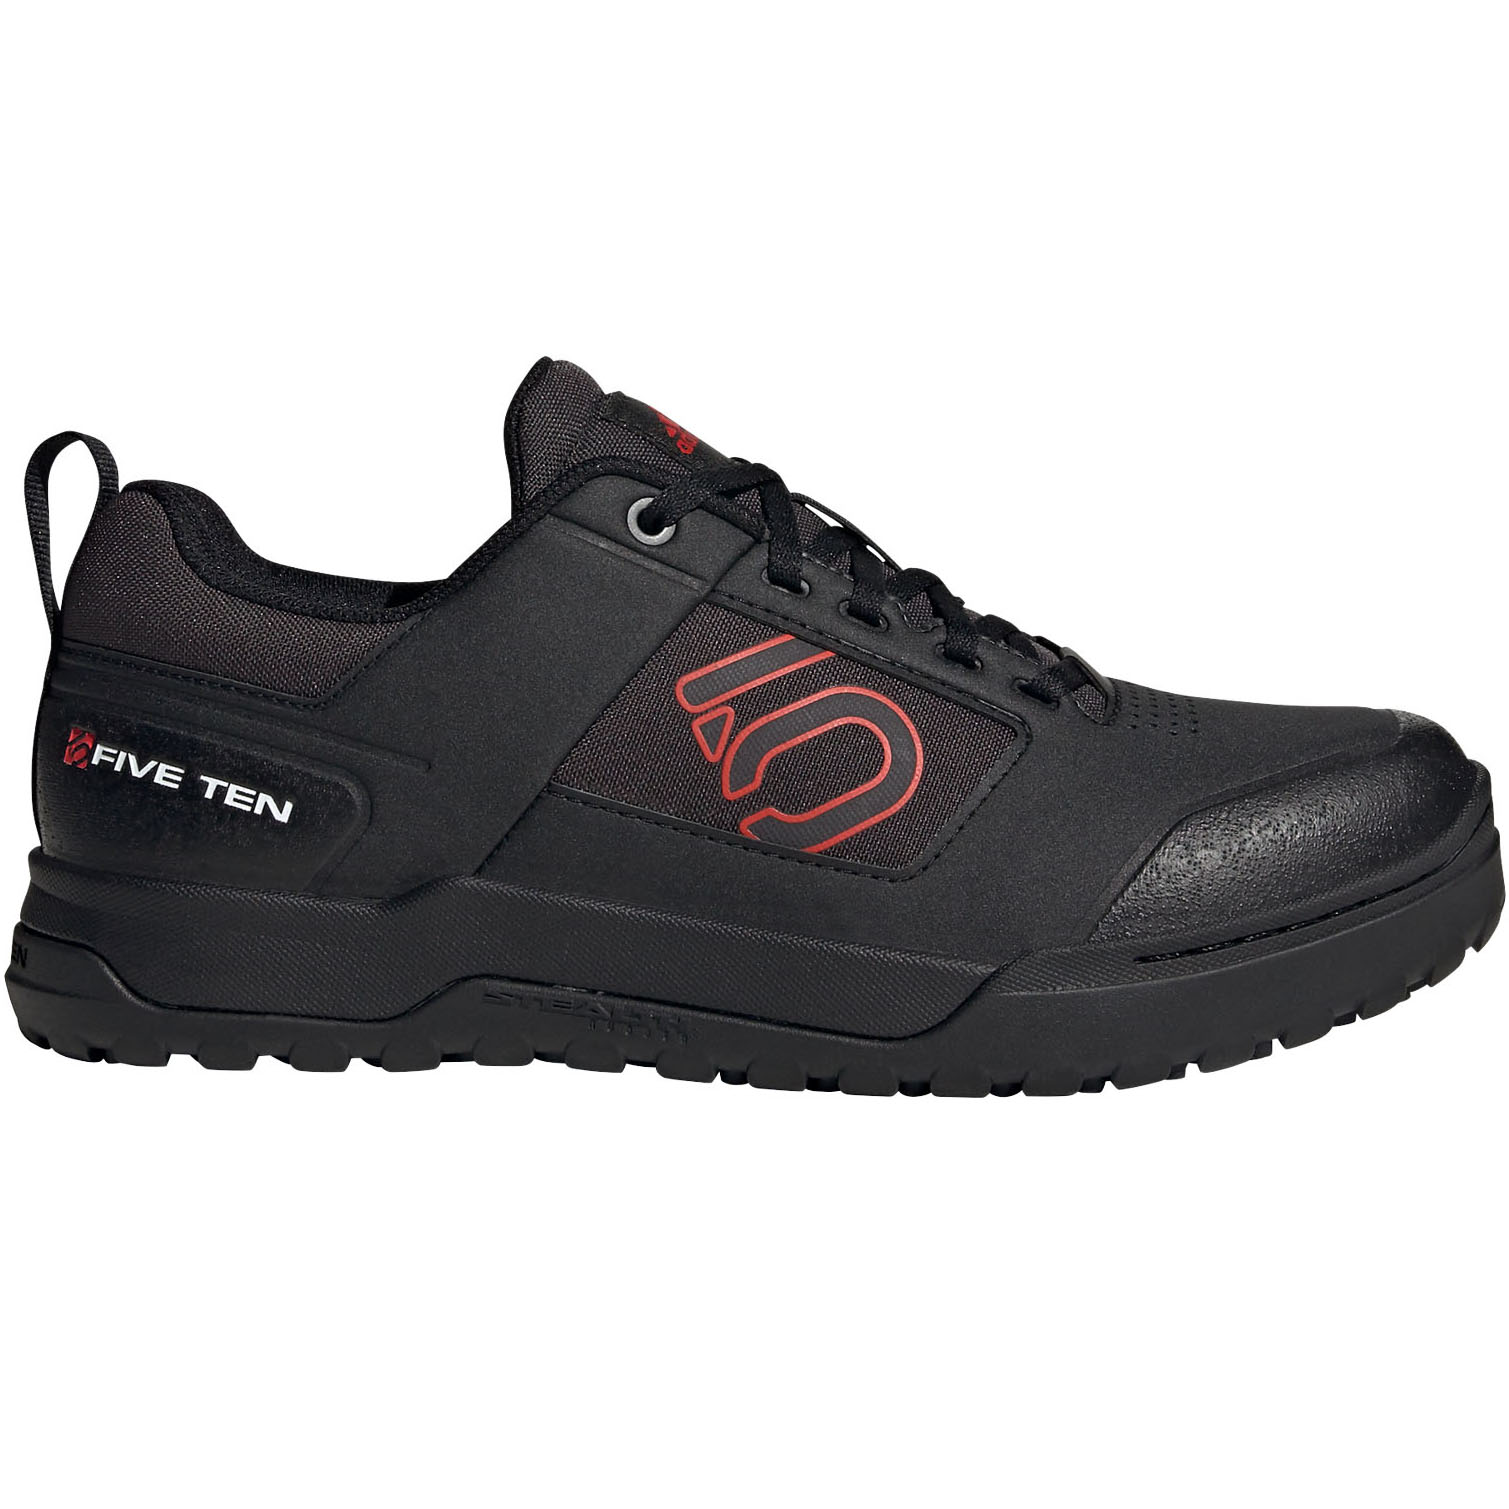 Picture of Five Ten Impact Pro Mountain Bike Shoes - core black/red